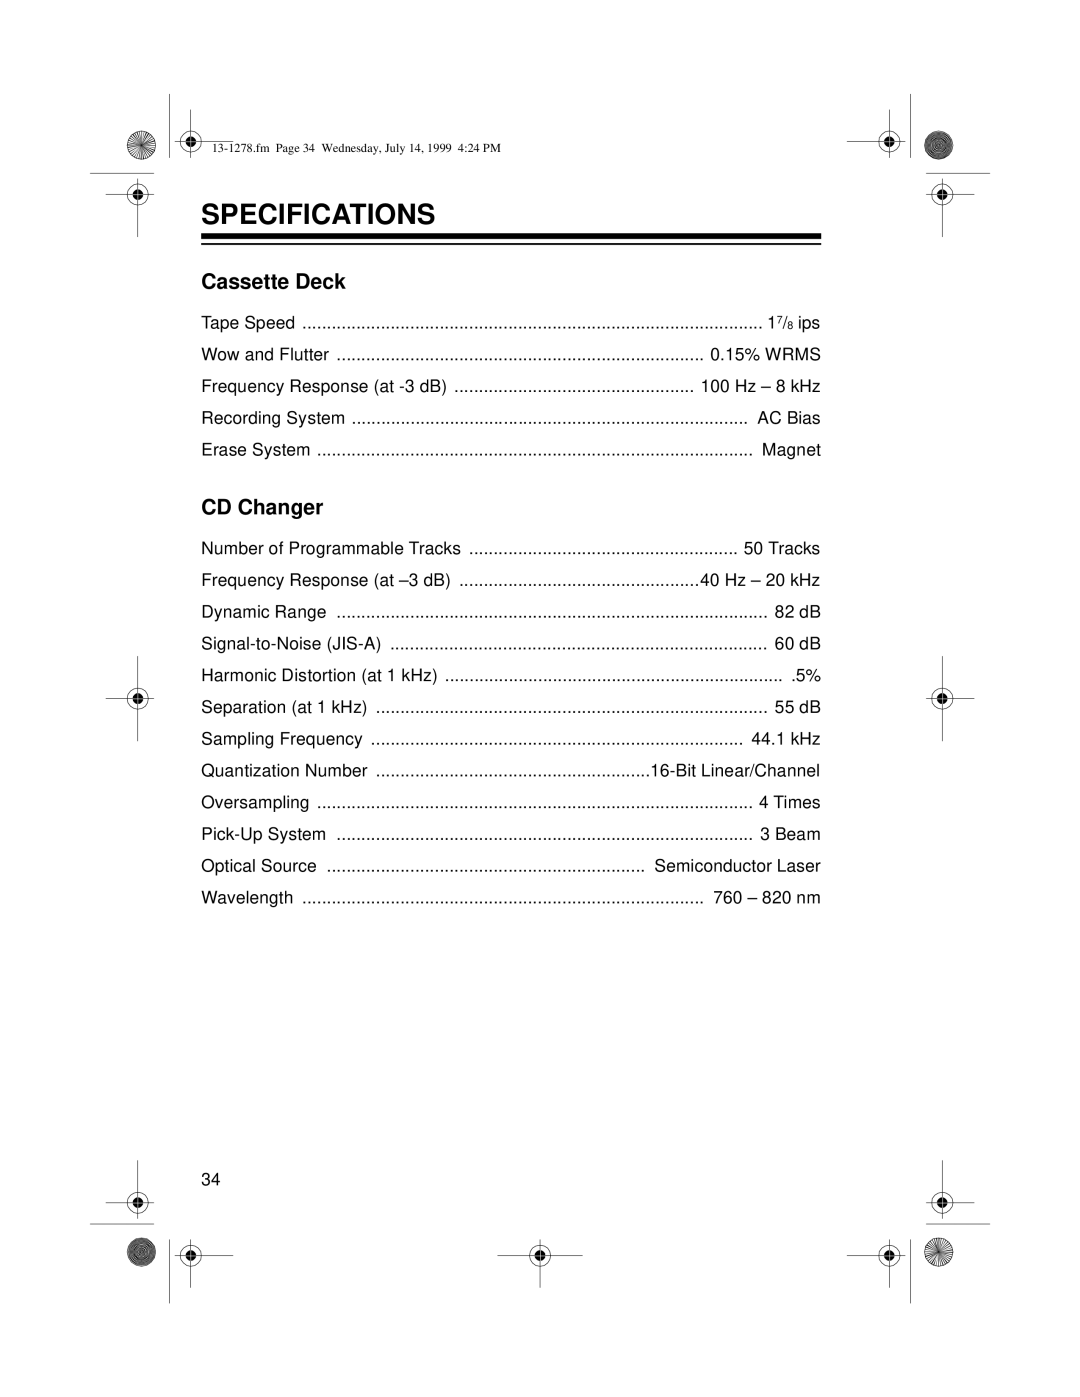 Optimus 731 owner manual Specifications, Cassette Deck, CD Changer 